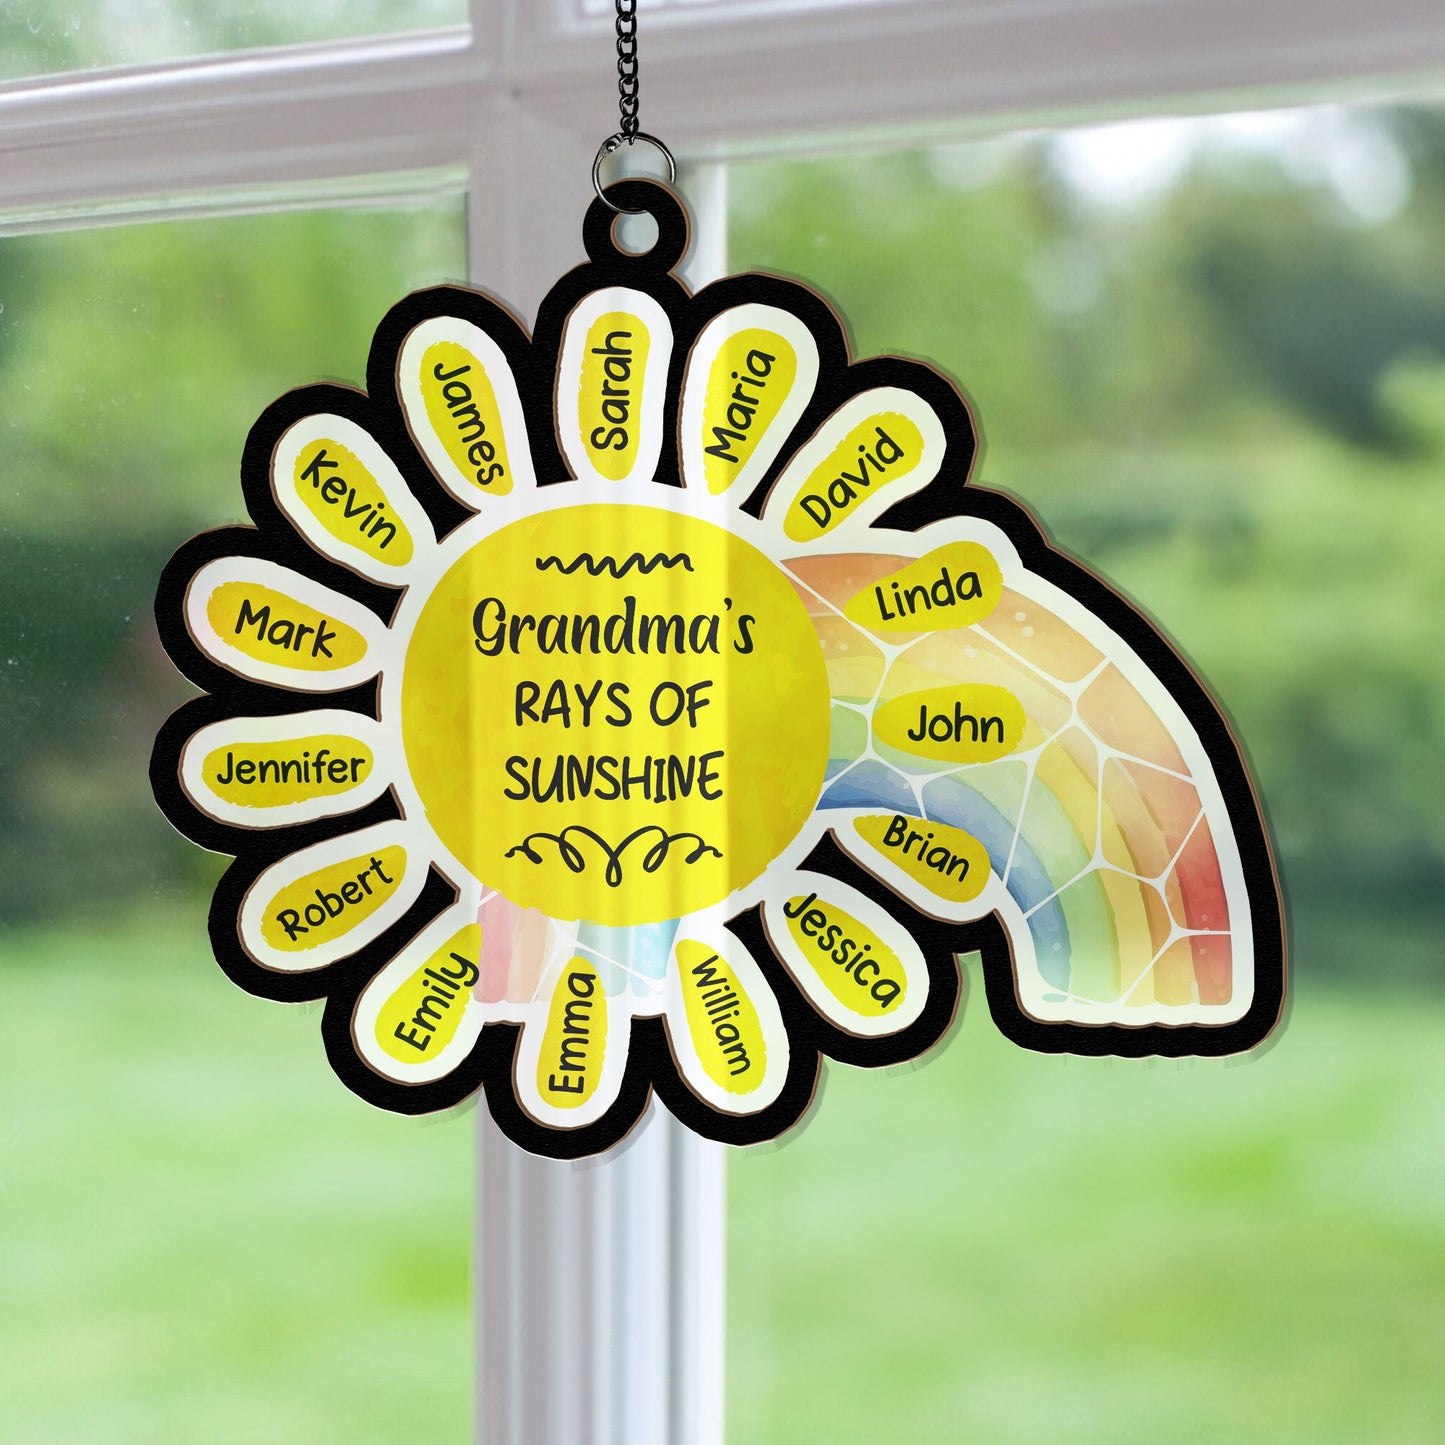 Grandma's Rays Of Sunshine - Personalized Window Hanging Suncatcher Ornament